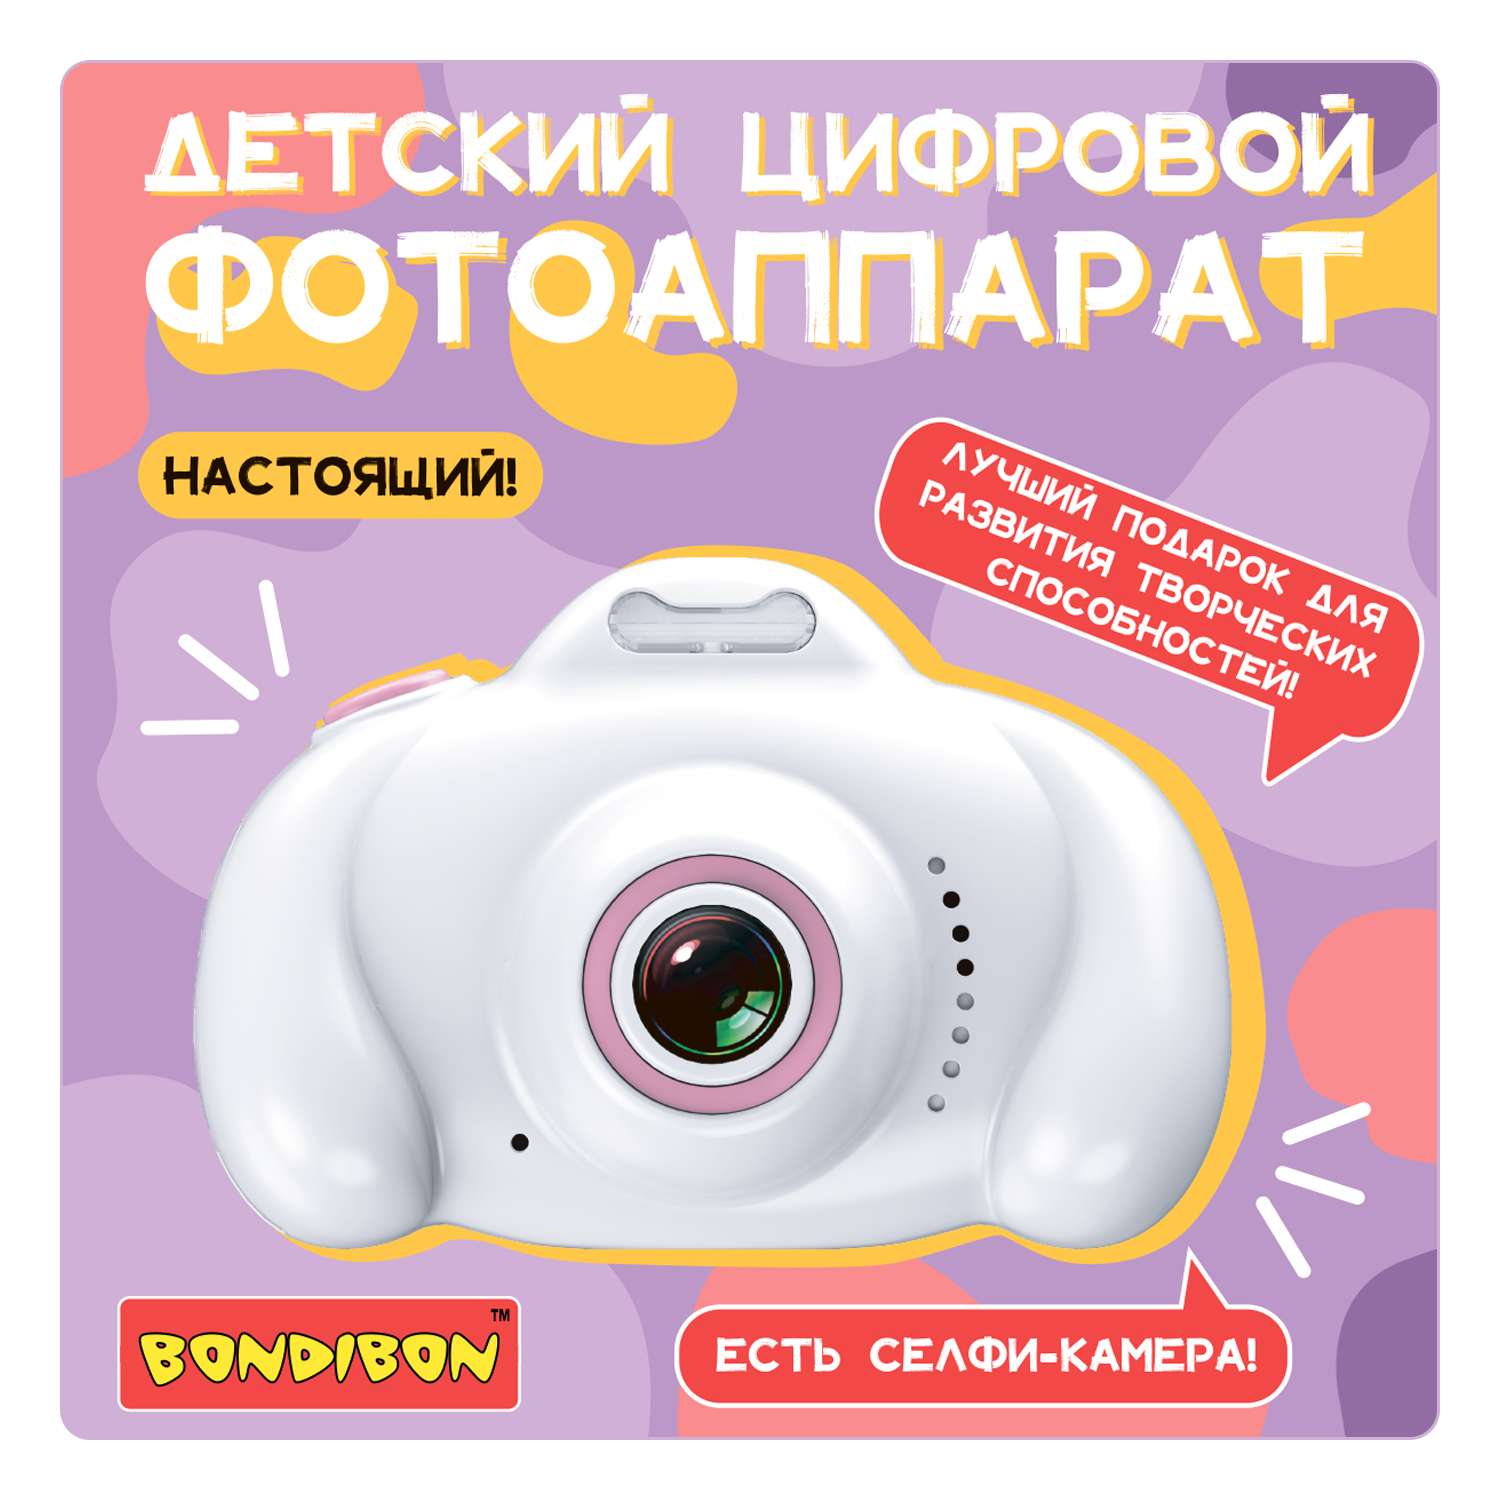 Цифровой фотоаппарат BONDIBON с селфи камерой и видео съемкой белого цвета - фото 2